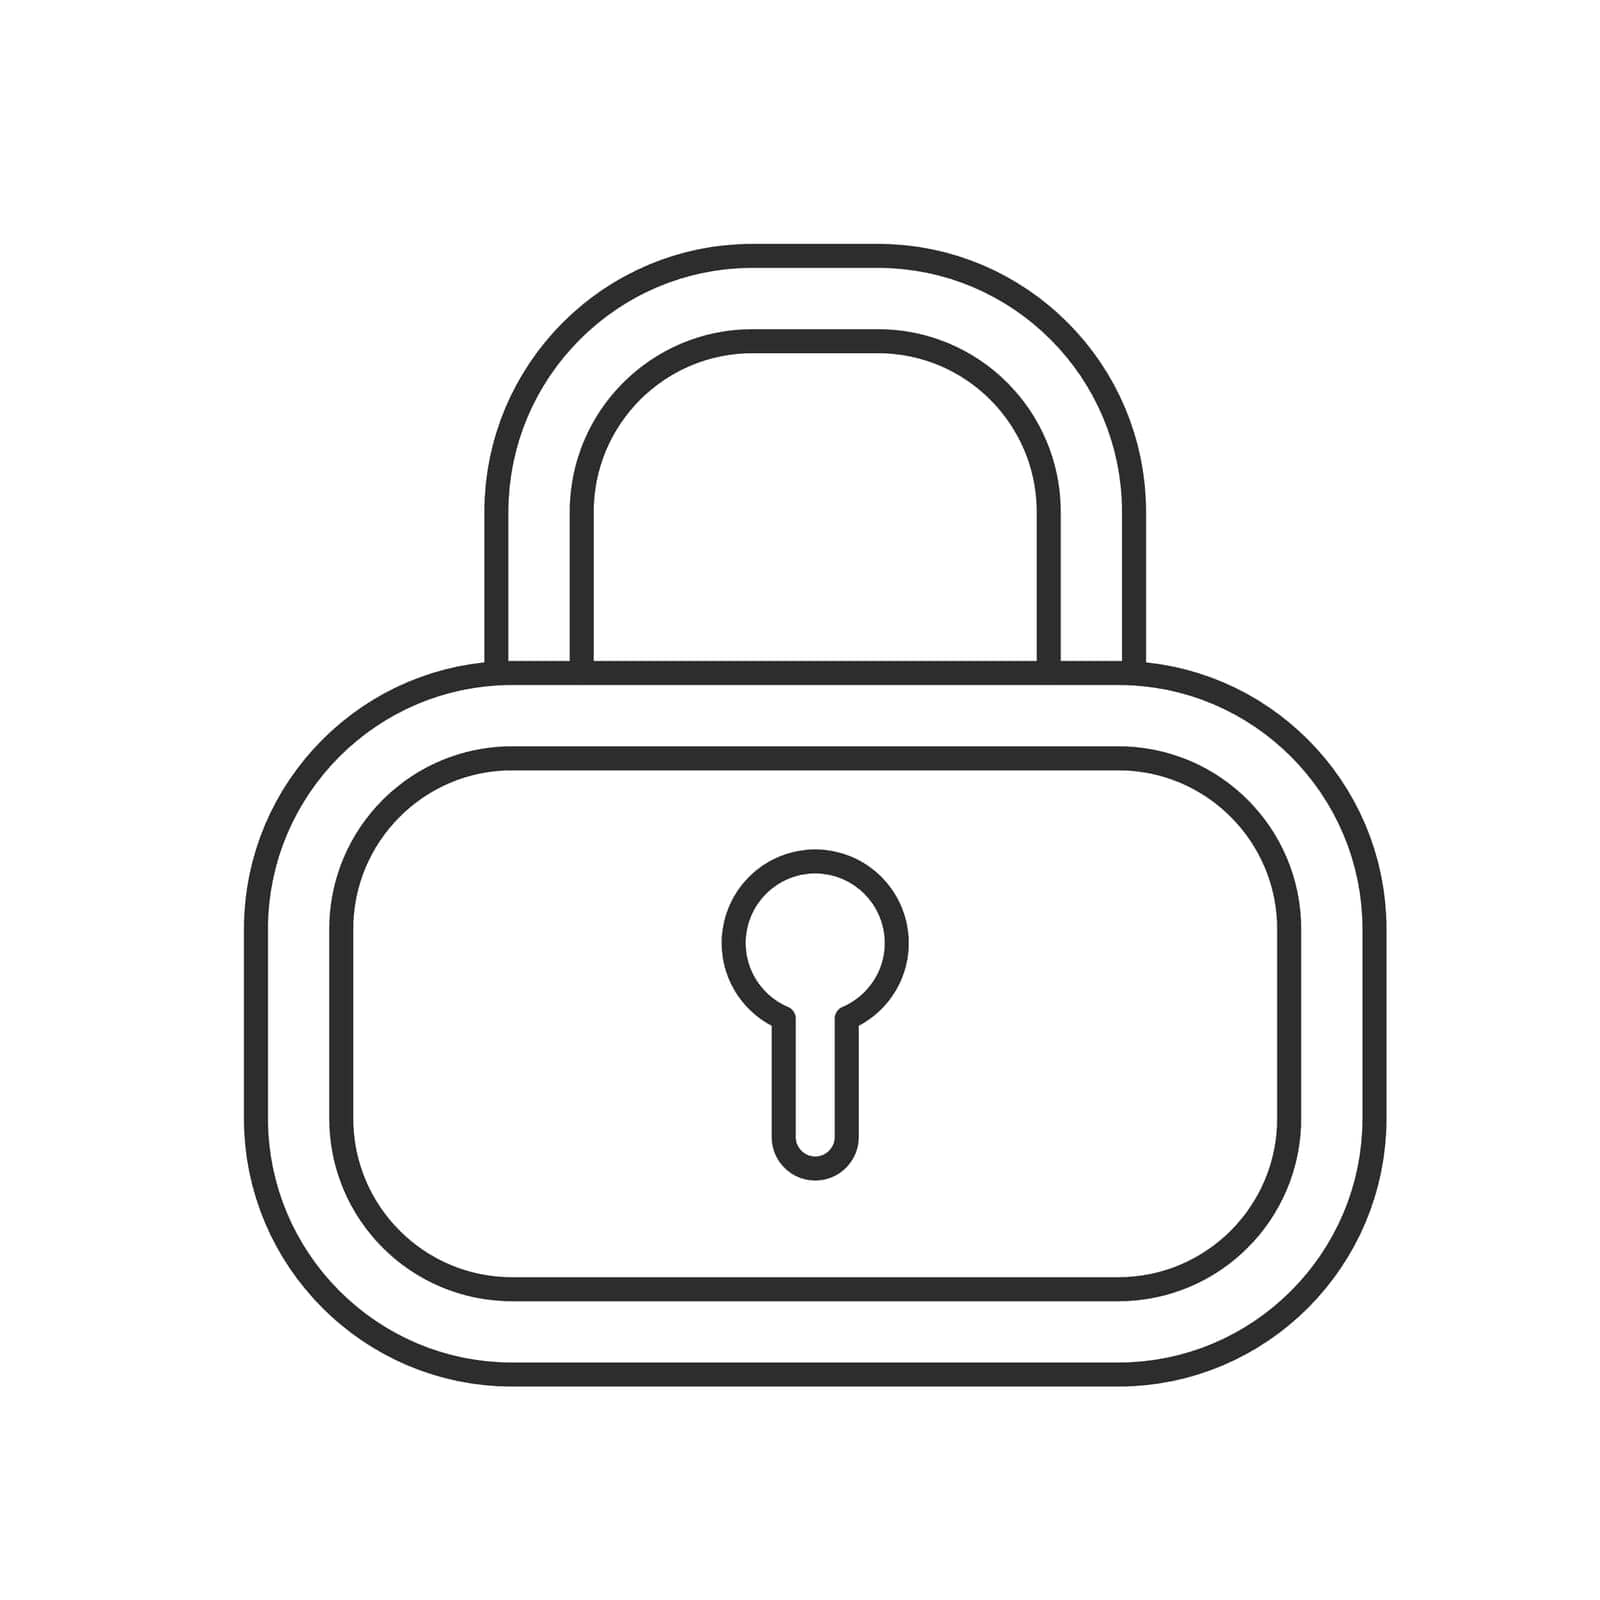 Lock icon with editable stroke. Cyber security by DmytroRazinkov